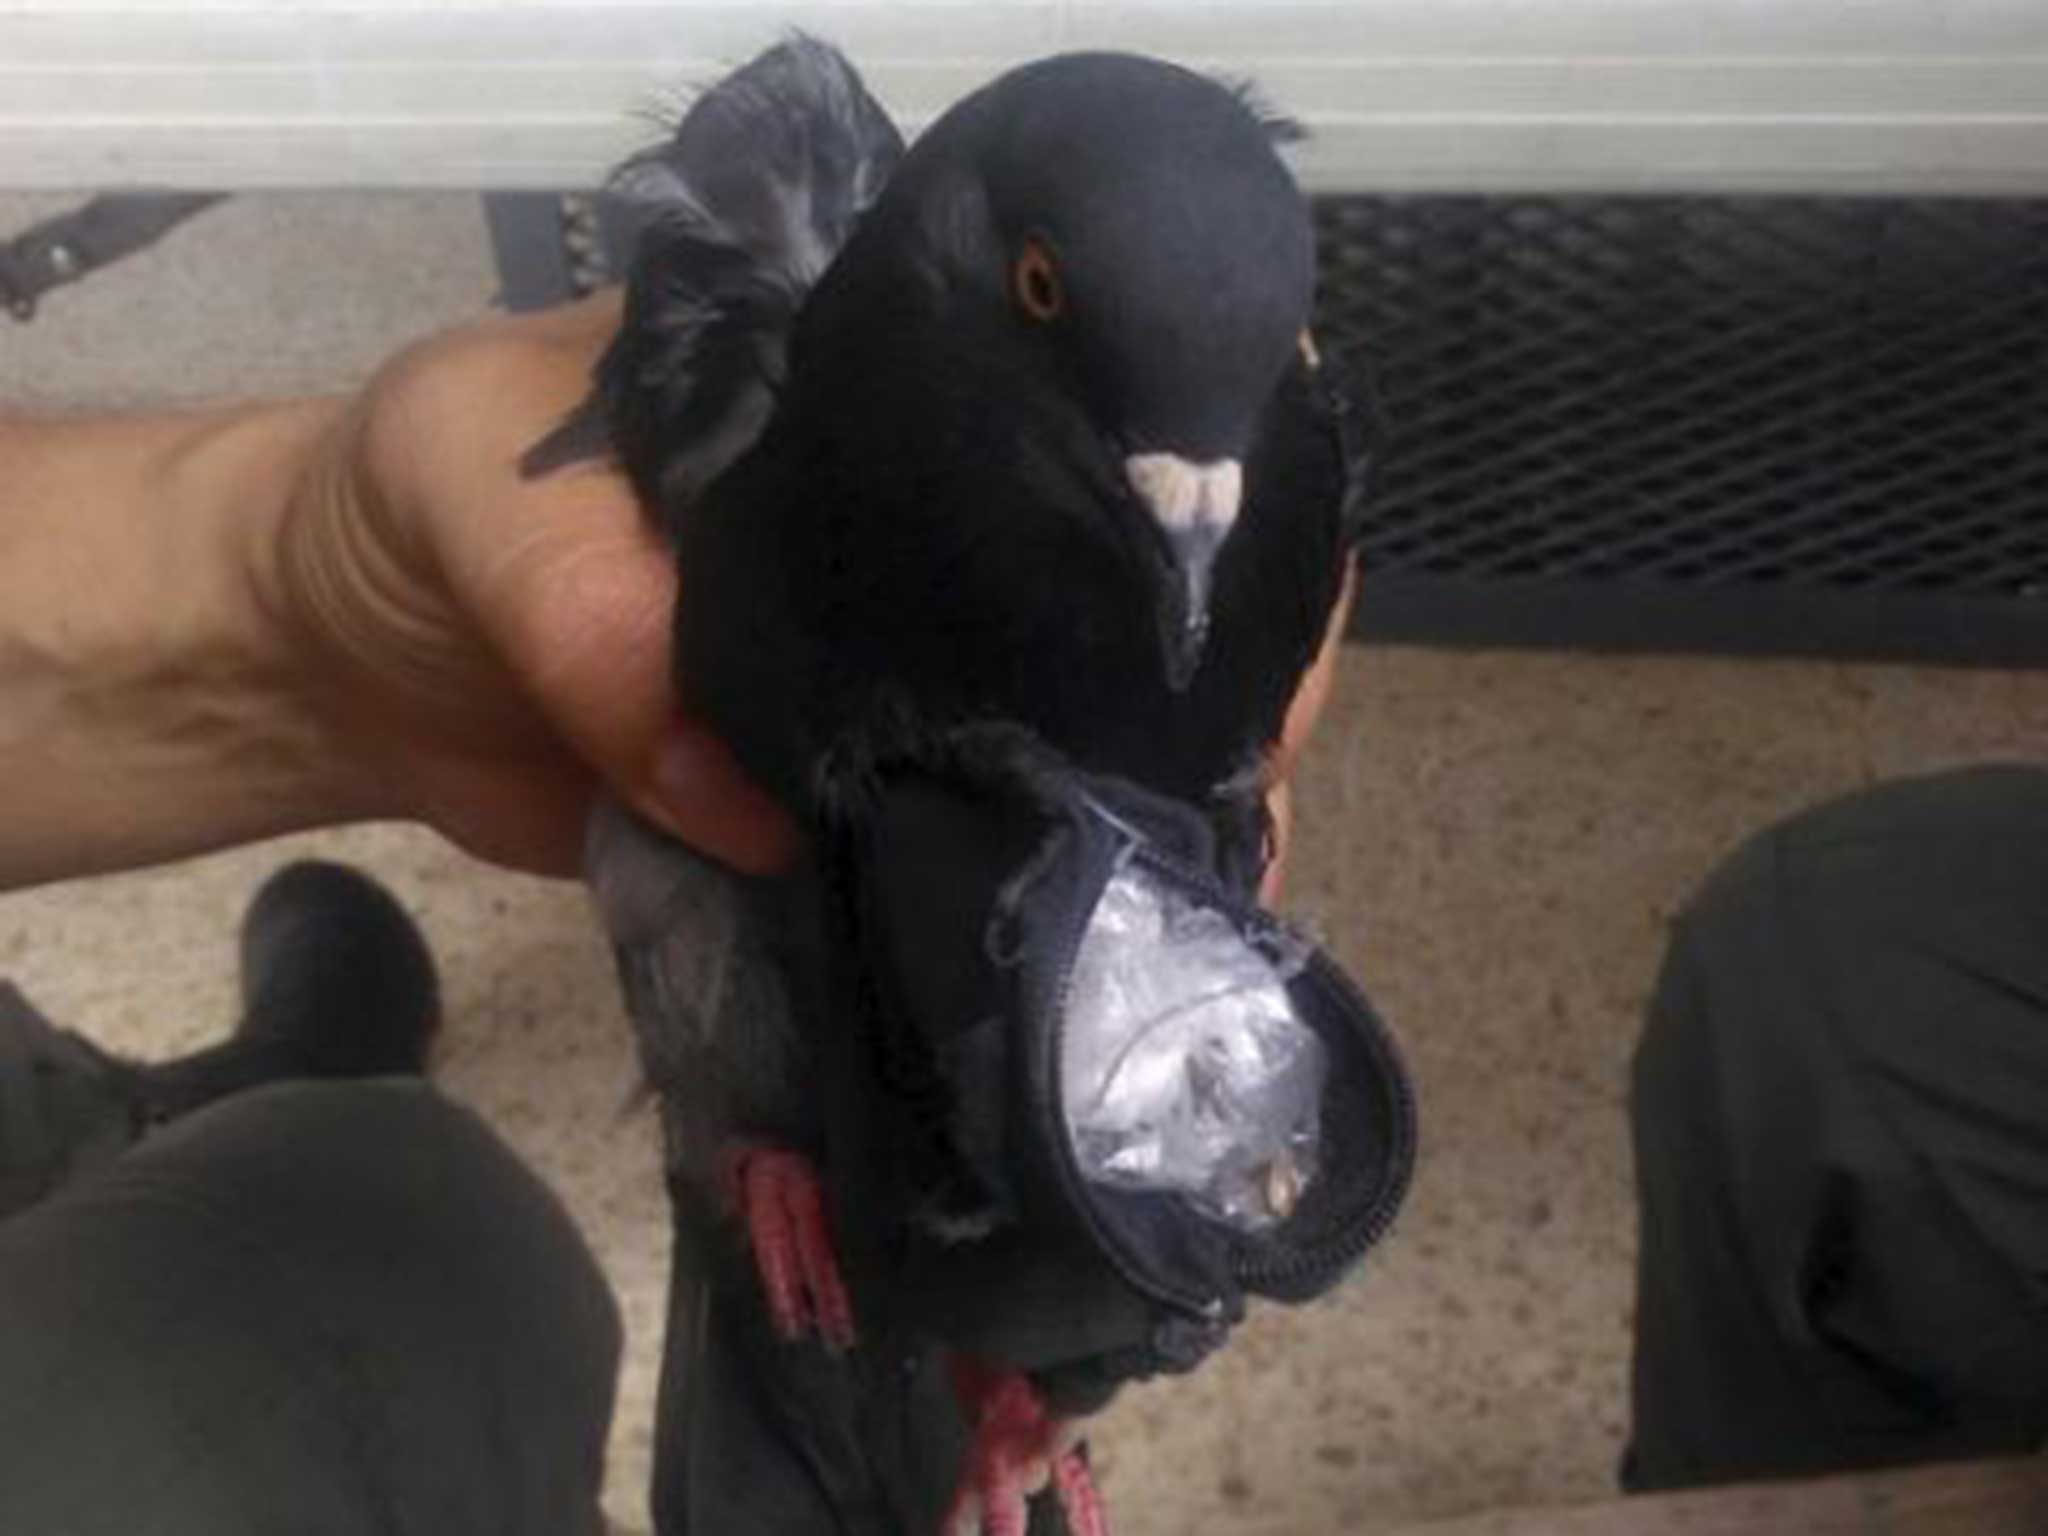 The pigeon in custody